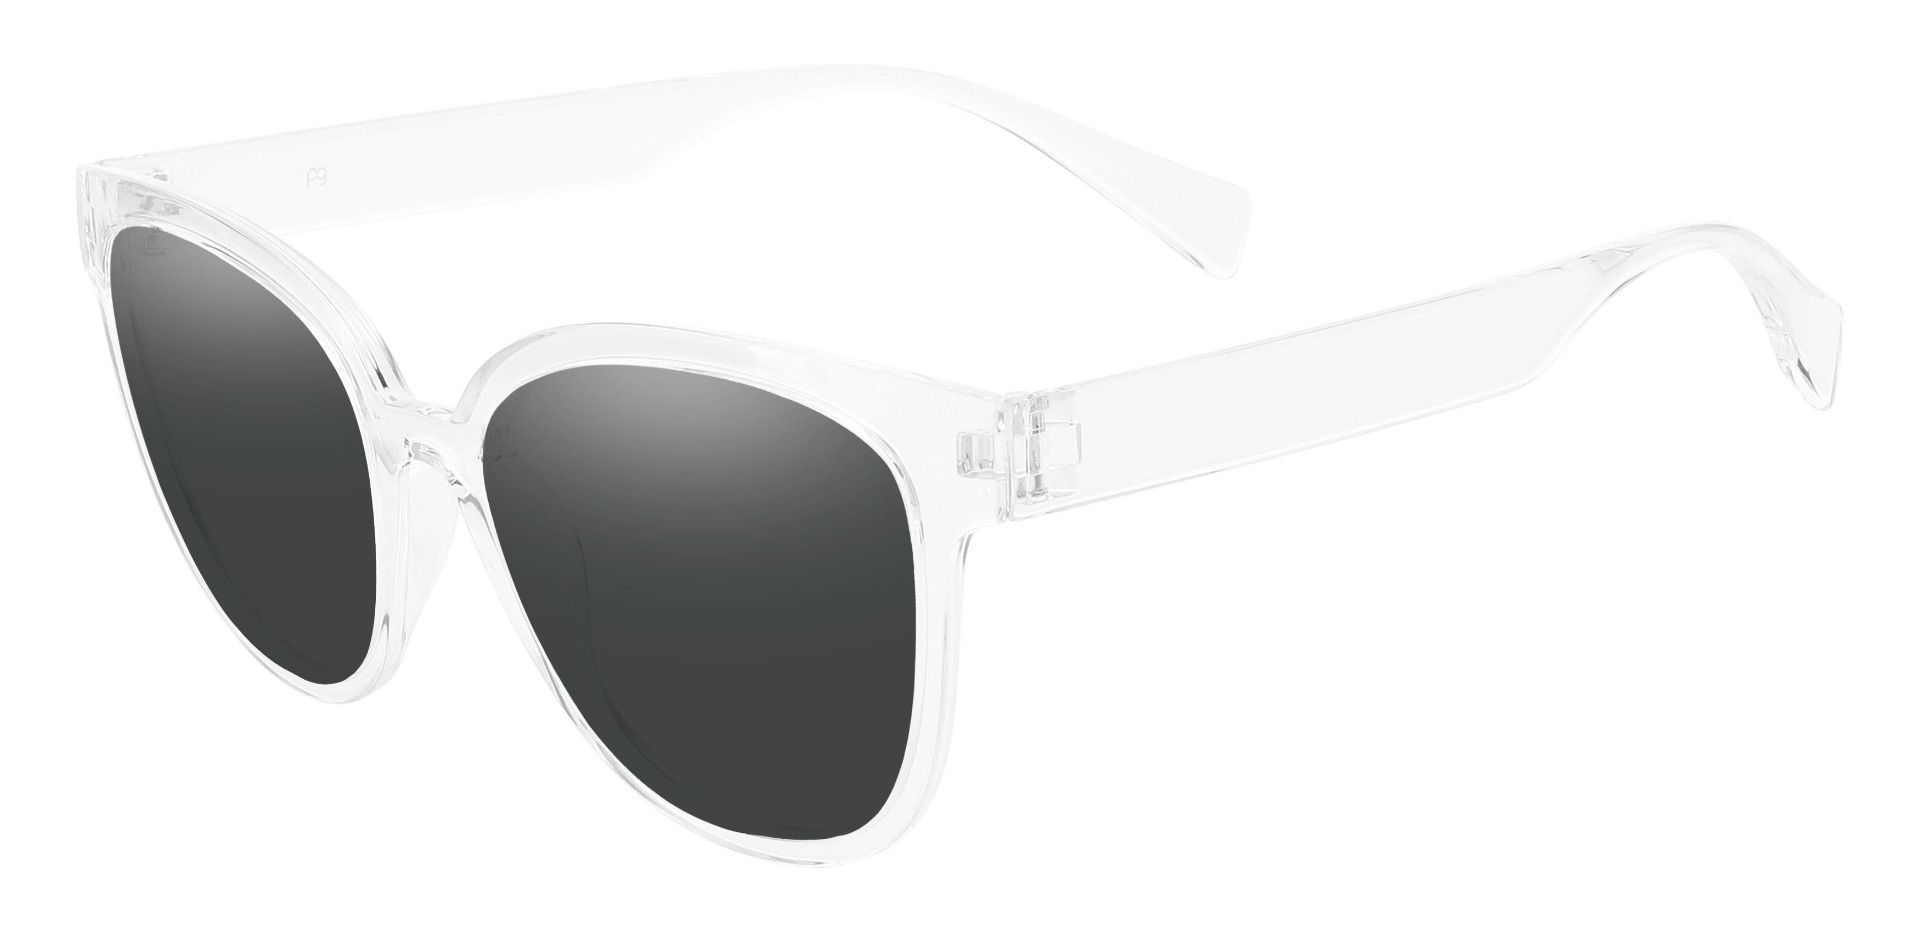 Maddock Square Progressive Sunglasses - Blue Frame With Gray Lenses